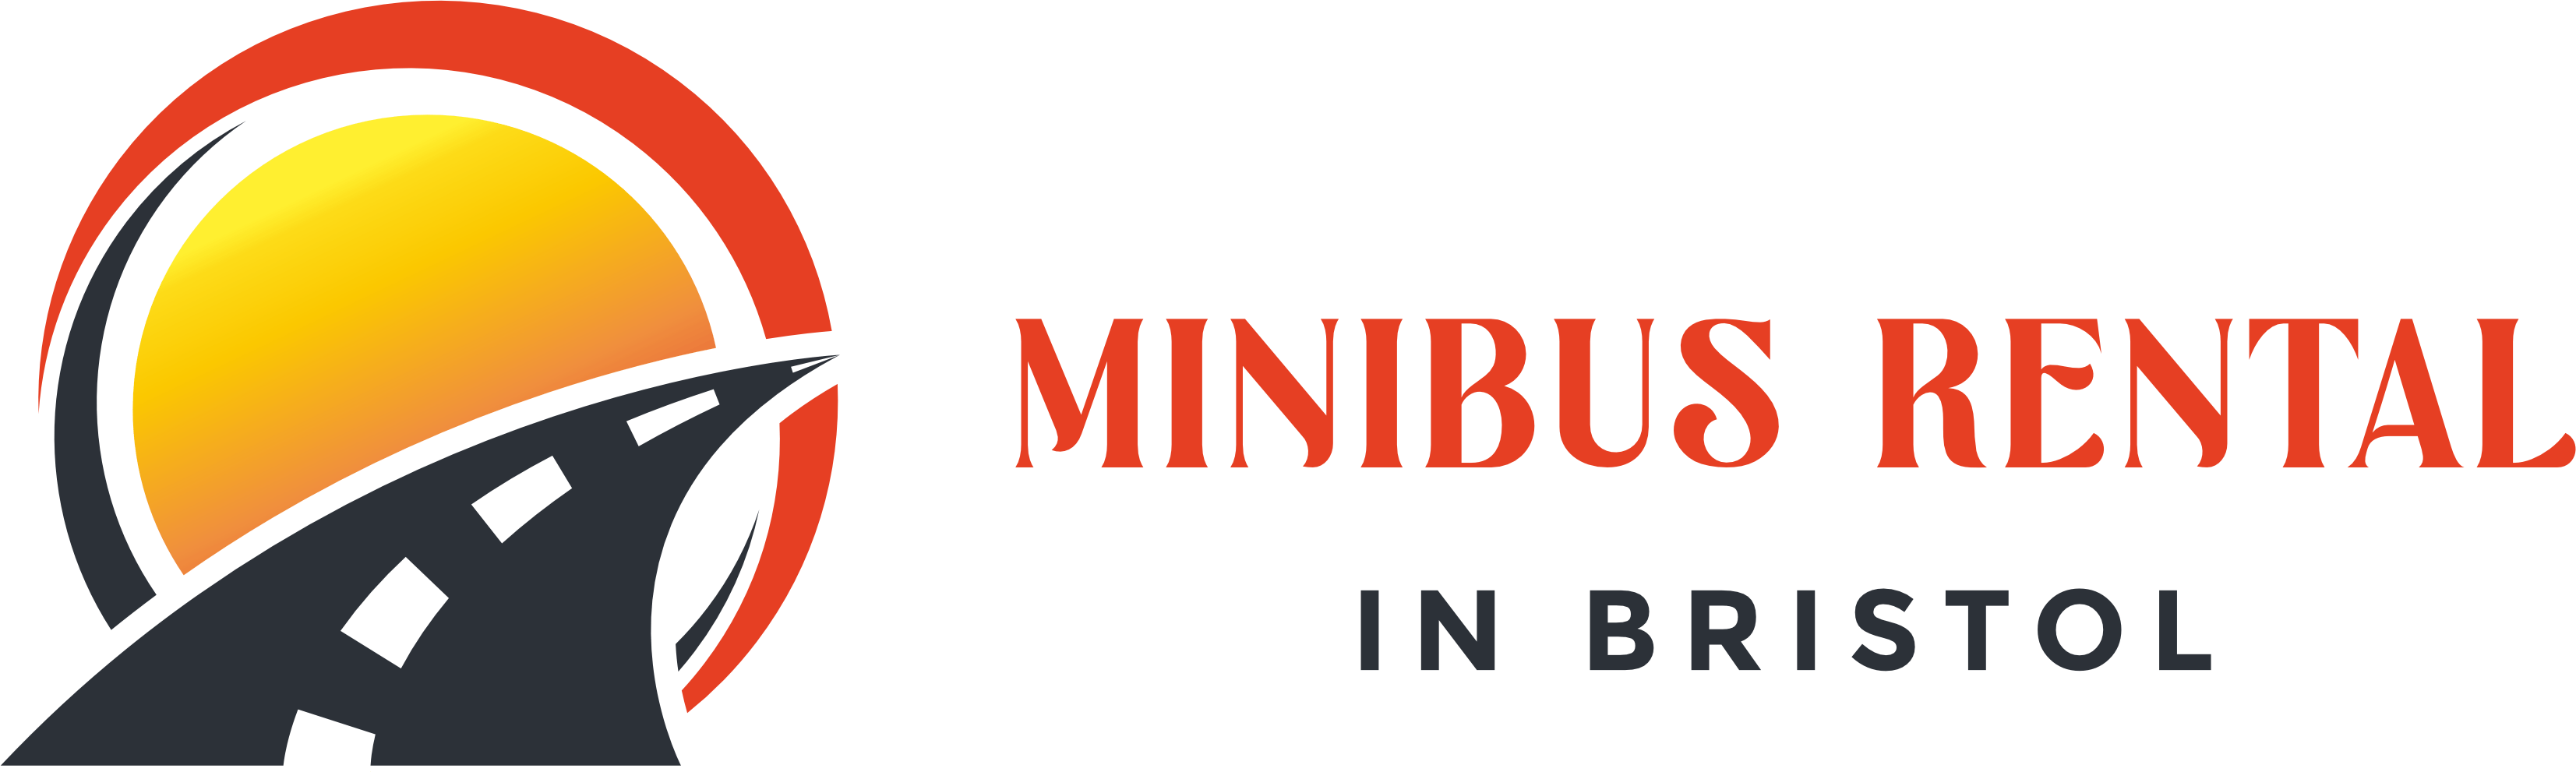 MInibus Rental in Bristol logo